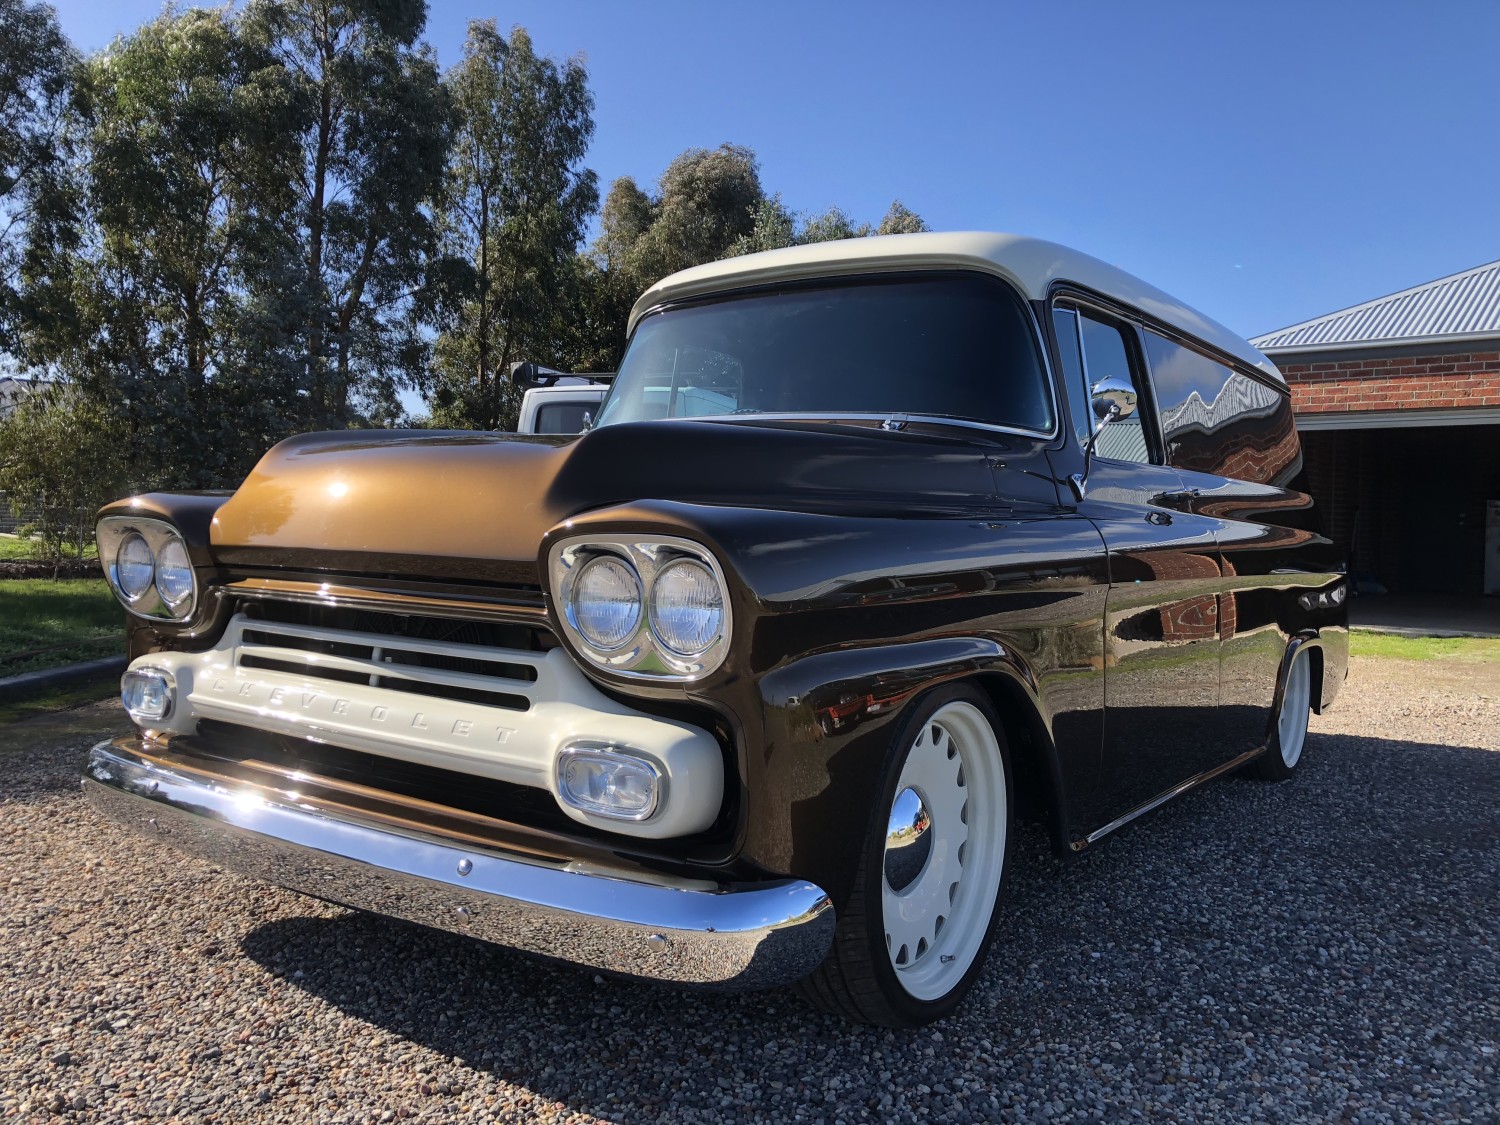 1959 Chevrolet 59 panel truck